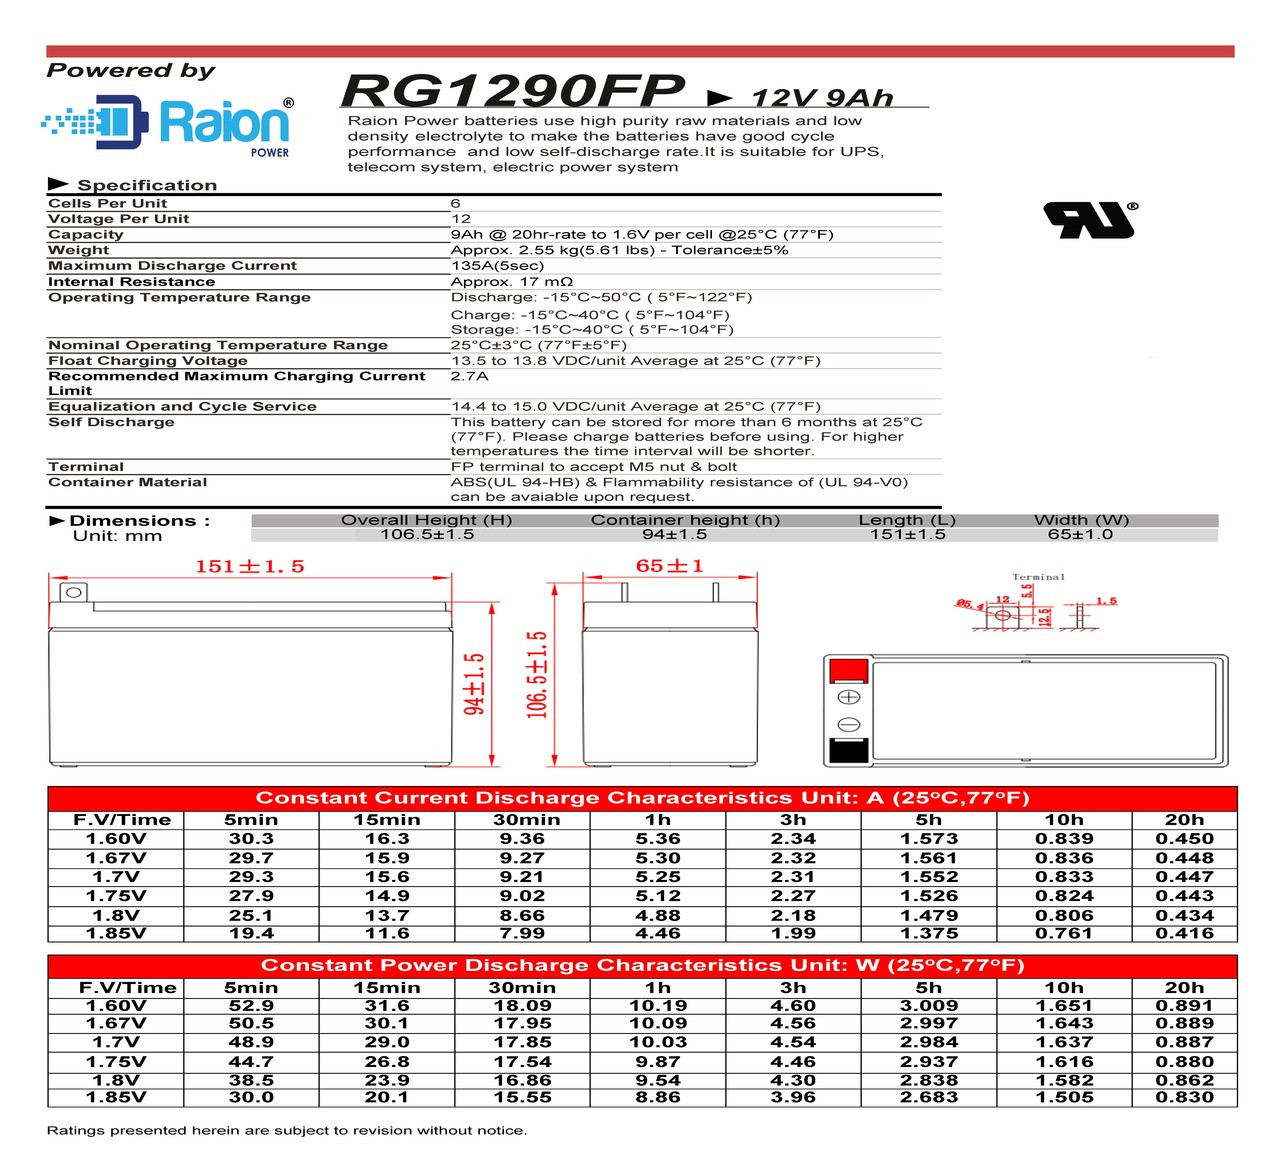 Raion Power 12V 9Ah Battery Data Sheet for Super Start 44001 Compact